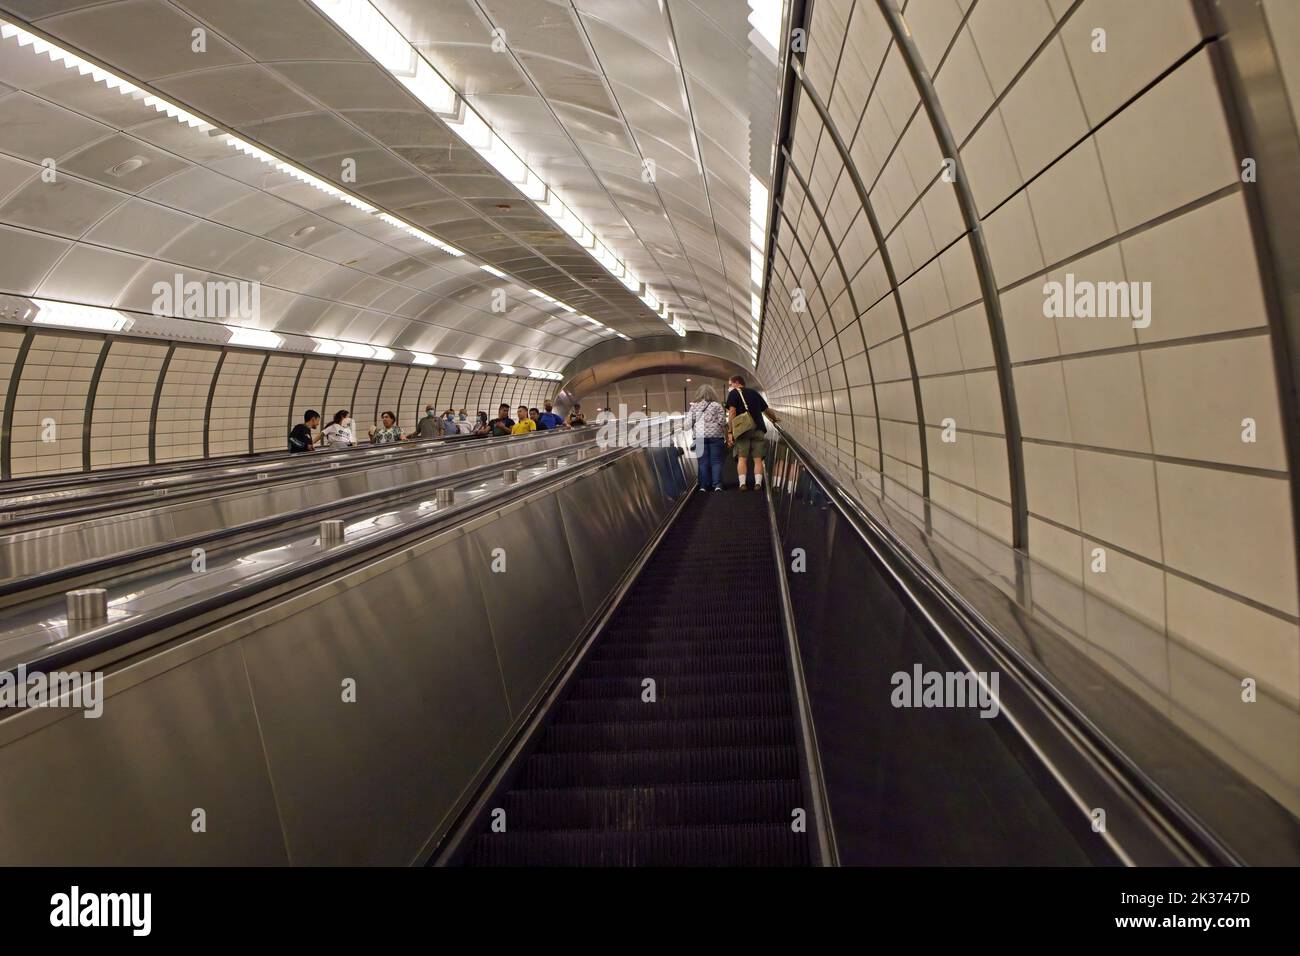 New York, NY, USA - Sept 24, 2022: A long escalator takes passengers 7 stories underground to the 7-train platform at Hudson Yards Stock Photo